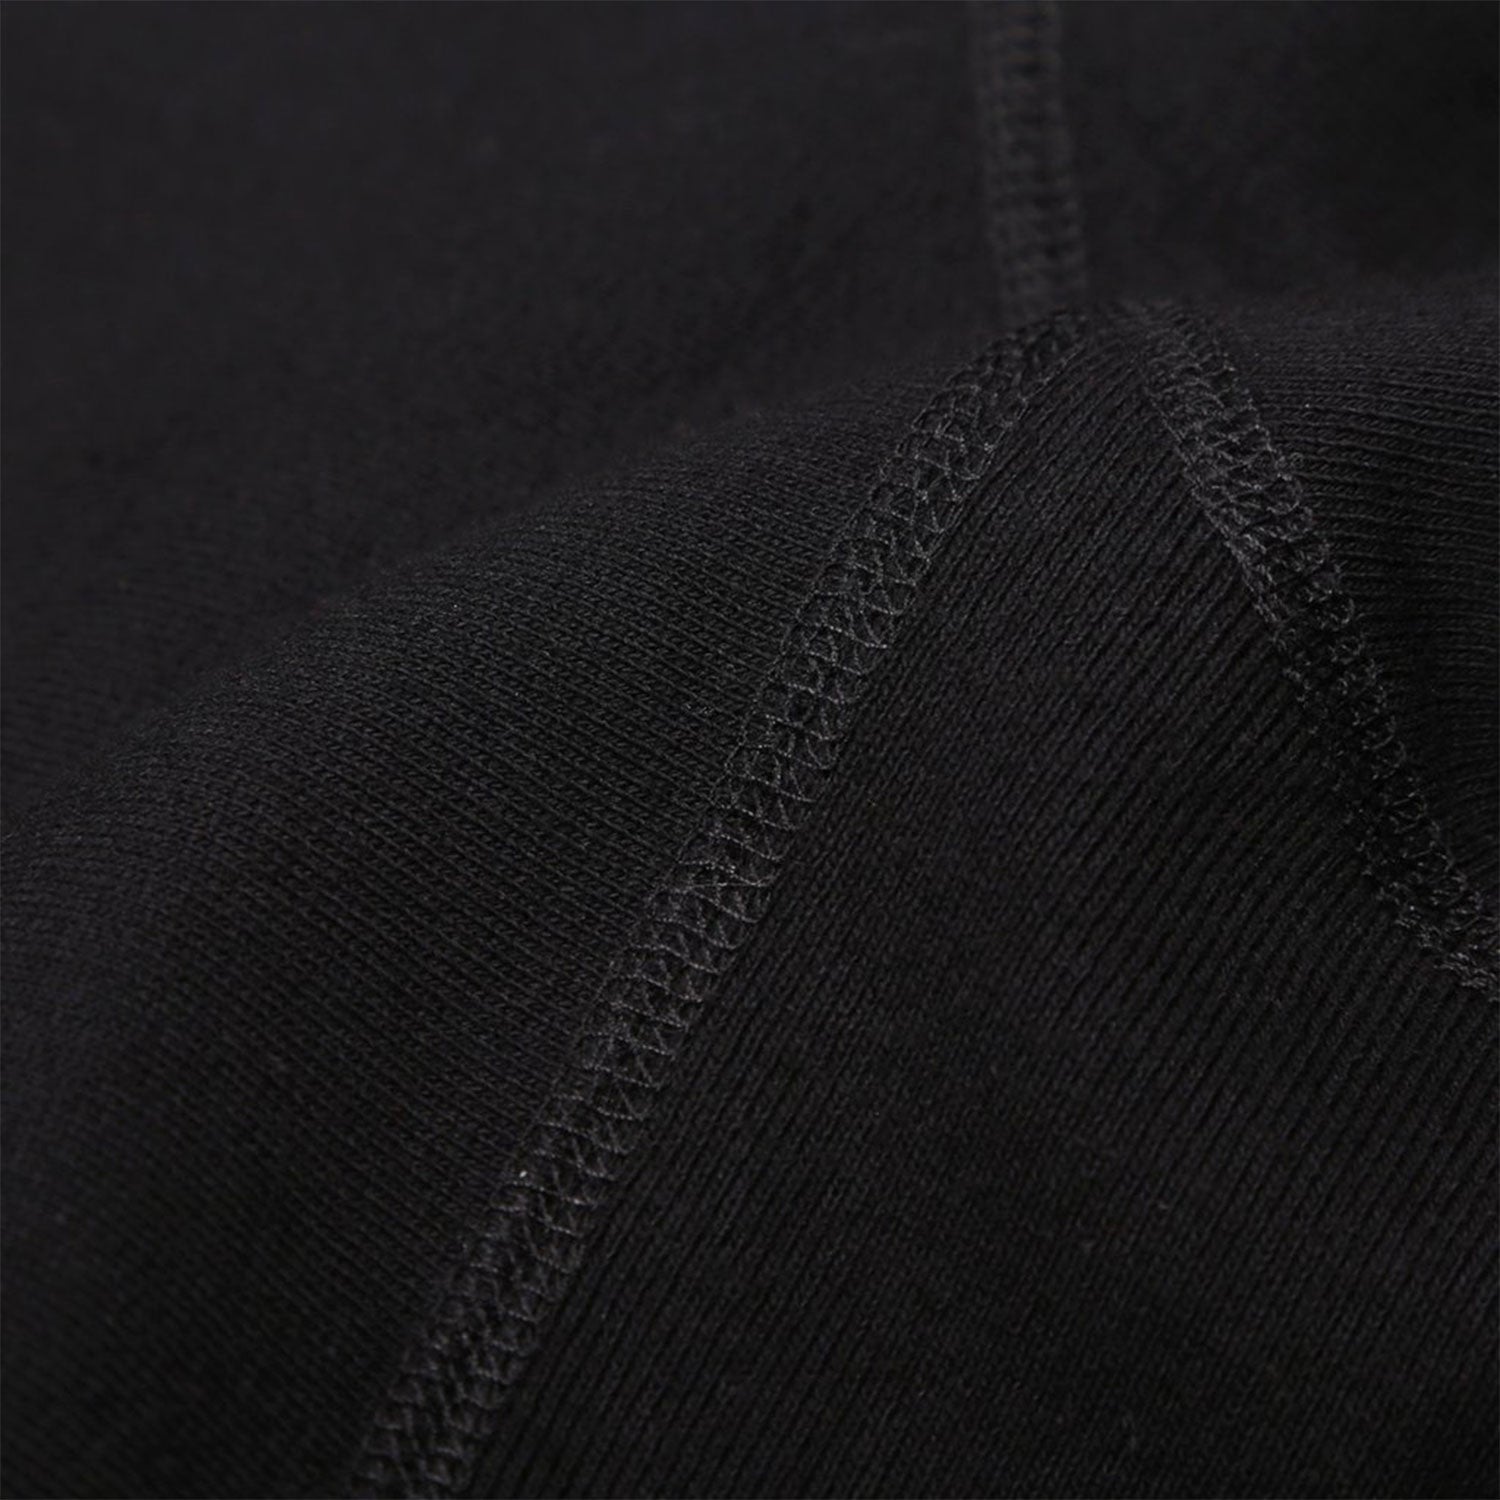 Adesso Signature Crewneck Sweatshirt - Black